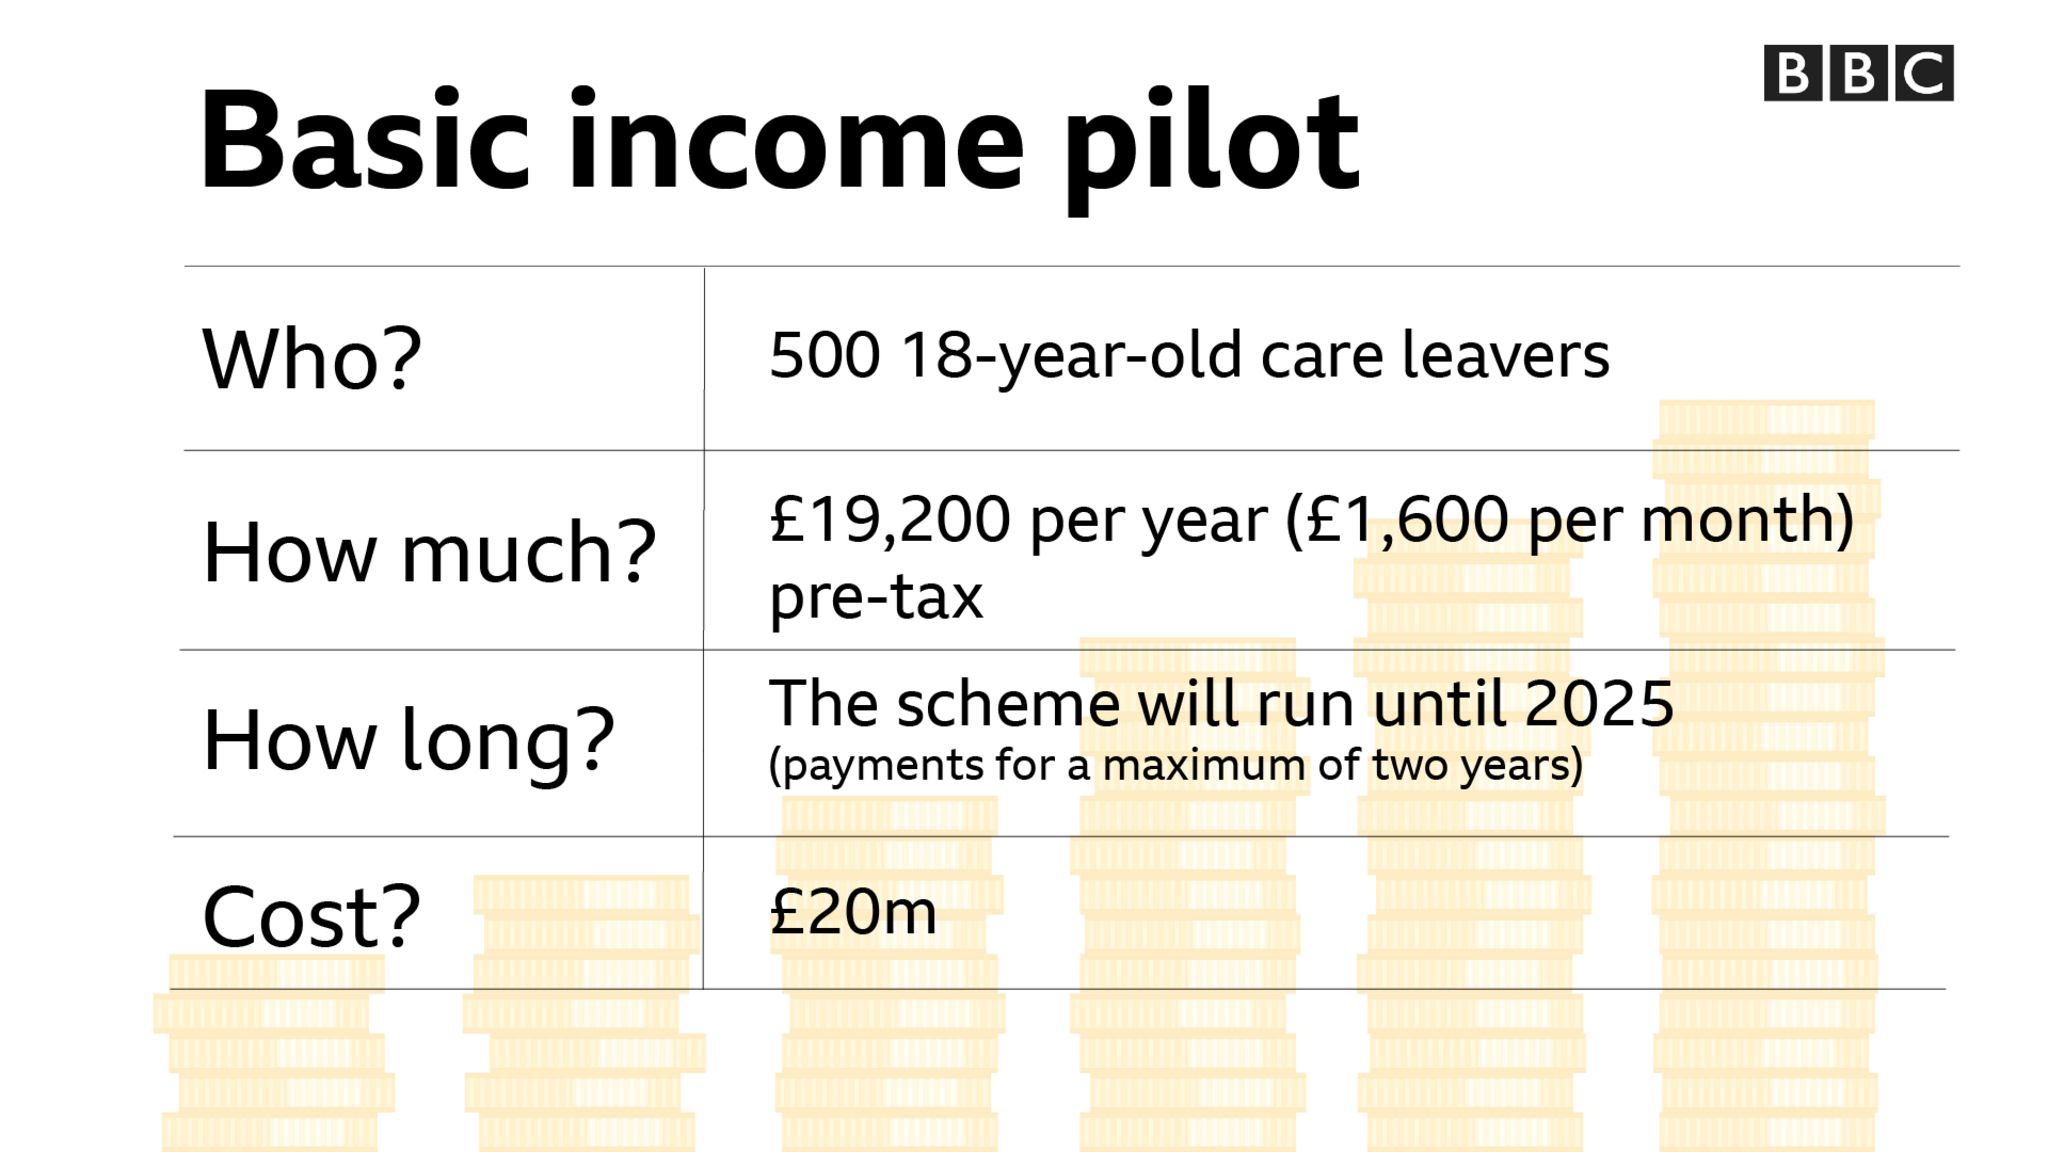 Basic income pilot summary graphic